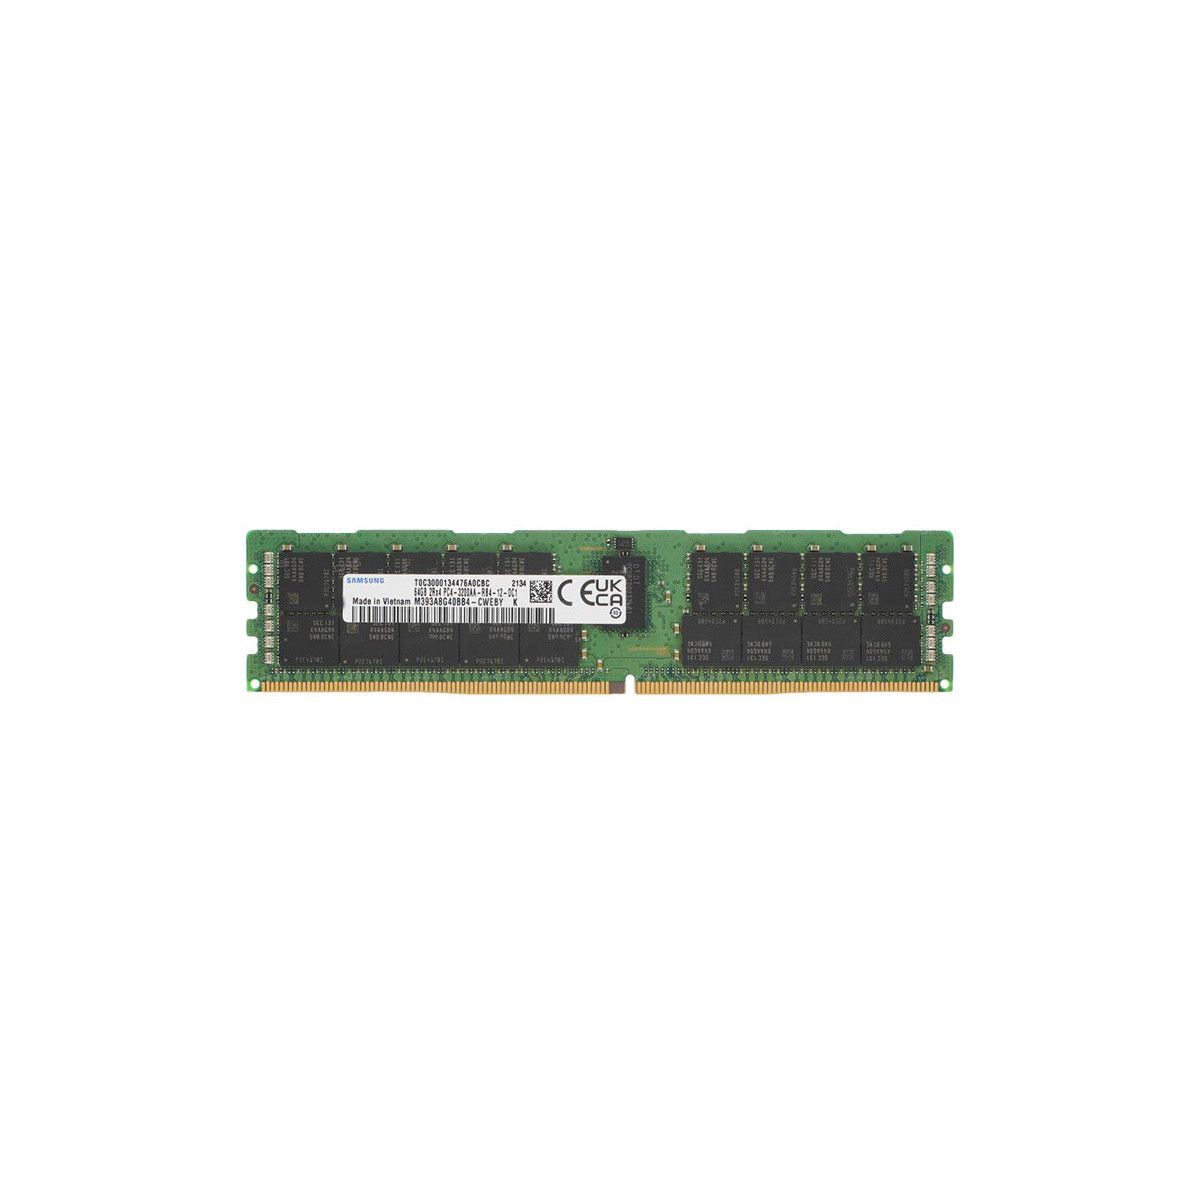 P25205‐B21-MS - Memstar 1x 64GB DDR4-3200 RDIMM PC4-25600R - Mem-star Compatible OEM Memory 1 - Memstar 